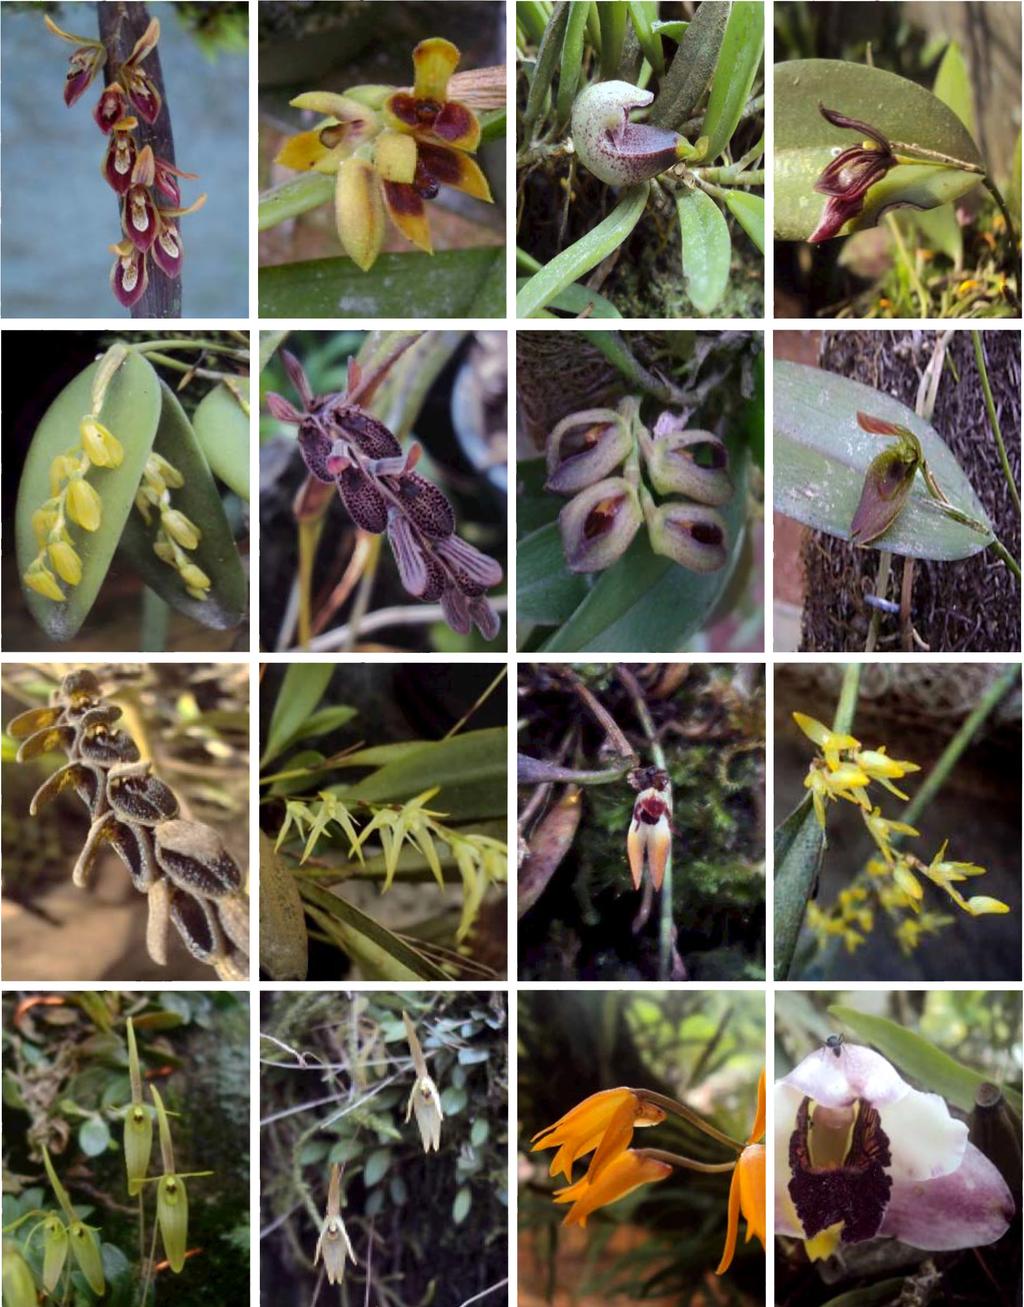 caetano et al. Updated checklist of the Orchidaceae of Benedito Novo 81 Figure 4. From top left to bottom right: Acianthera alborosea. A. aphtosa. A. bragae. A. calopedilon. A. luteola. A. pubescens.